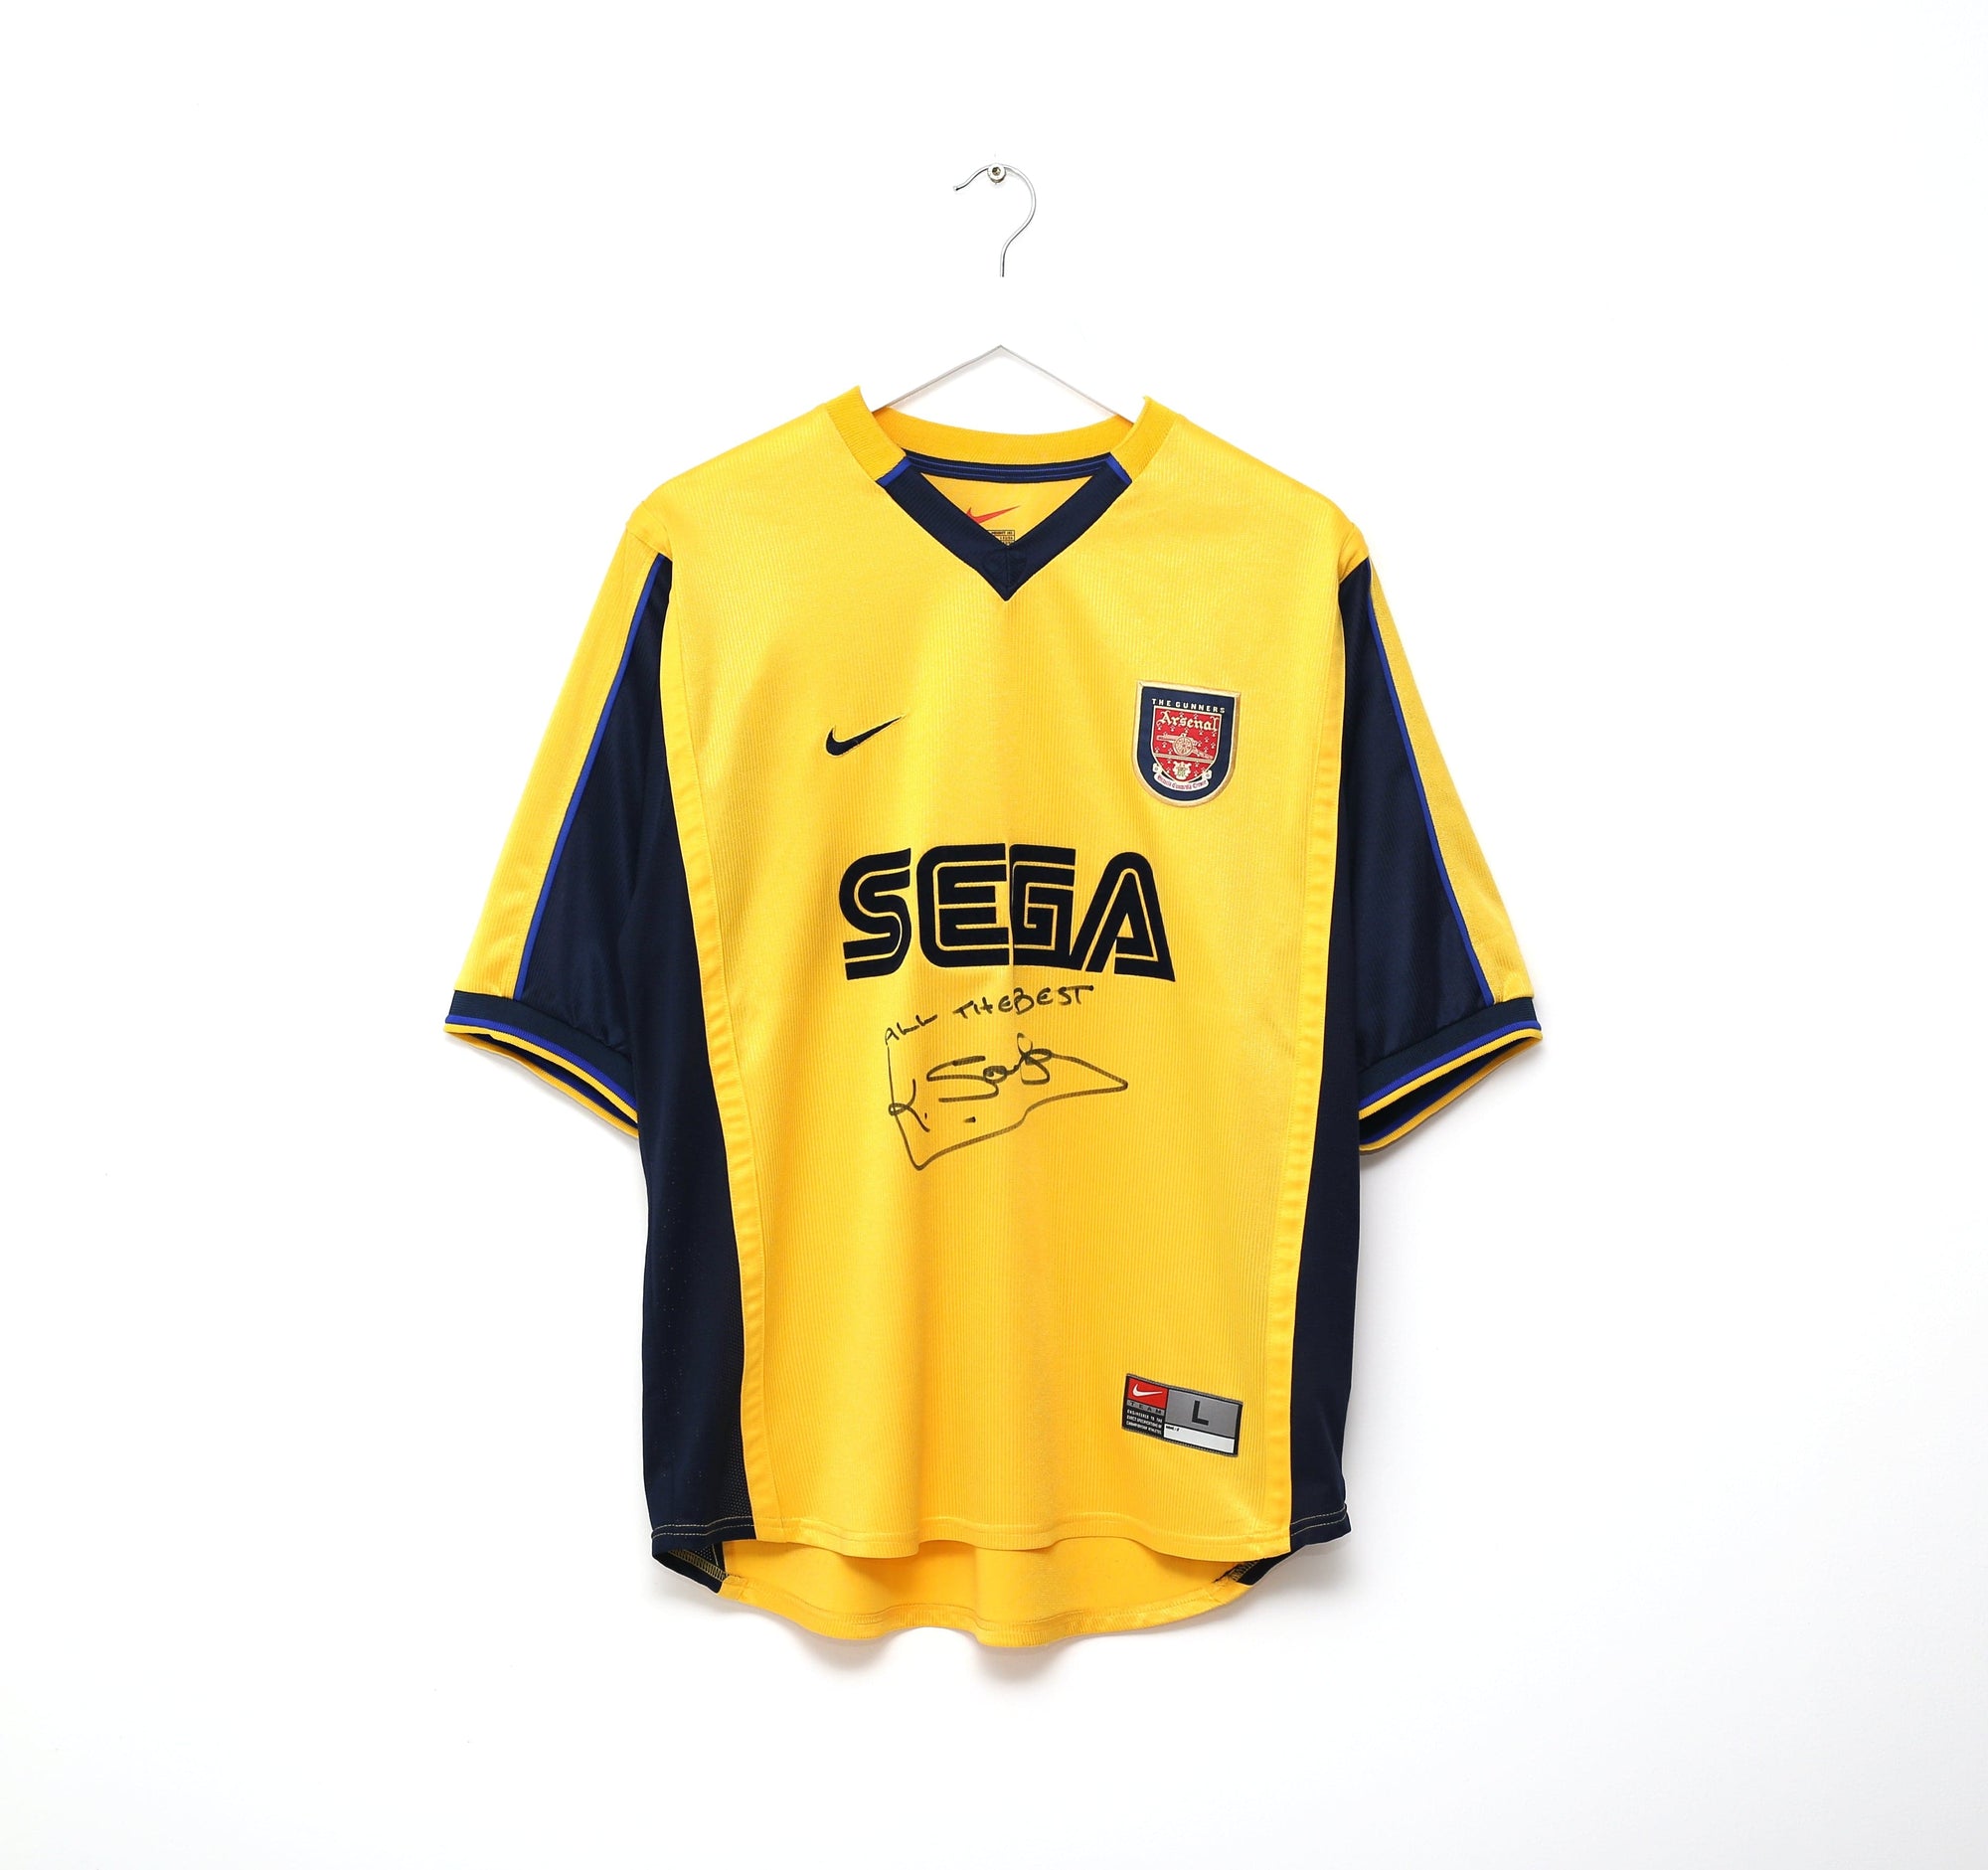 1999/00 HENRY #14 Arsenal Vintage Nike UEFA Cup Away Football Shirt Jersey (L)